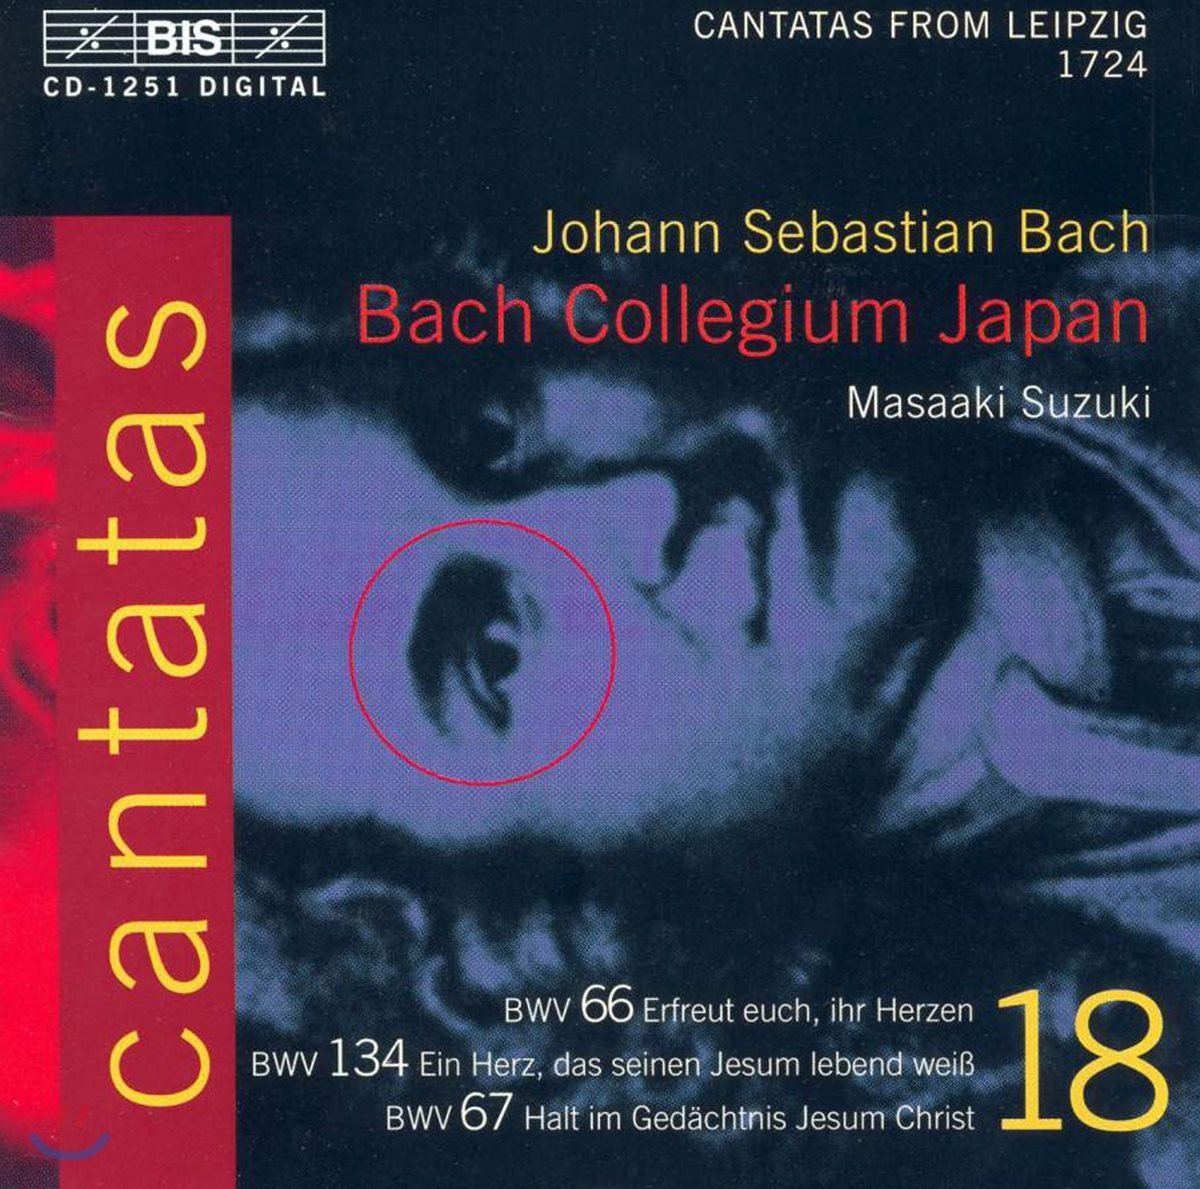 Robin Blaze 바흐: 칸타타 18권 (Bach: Cantatas Vol. 18)